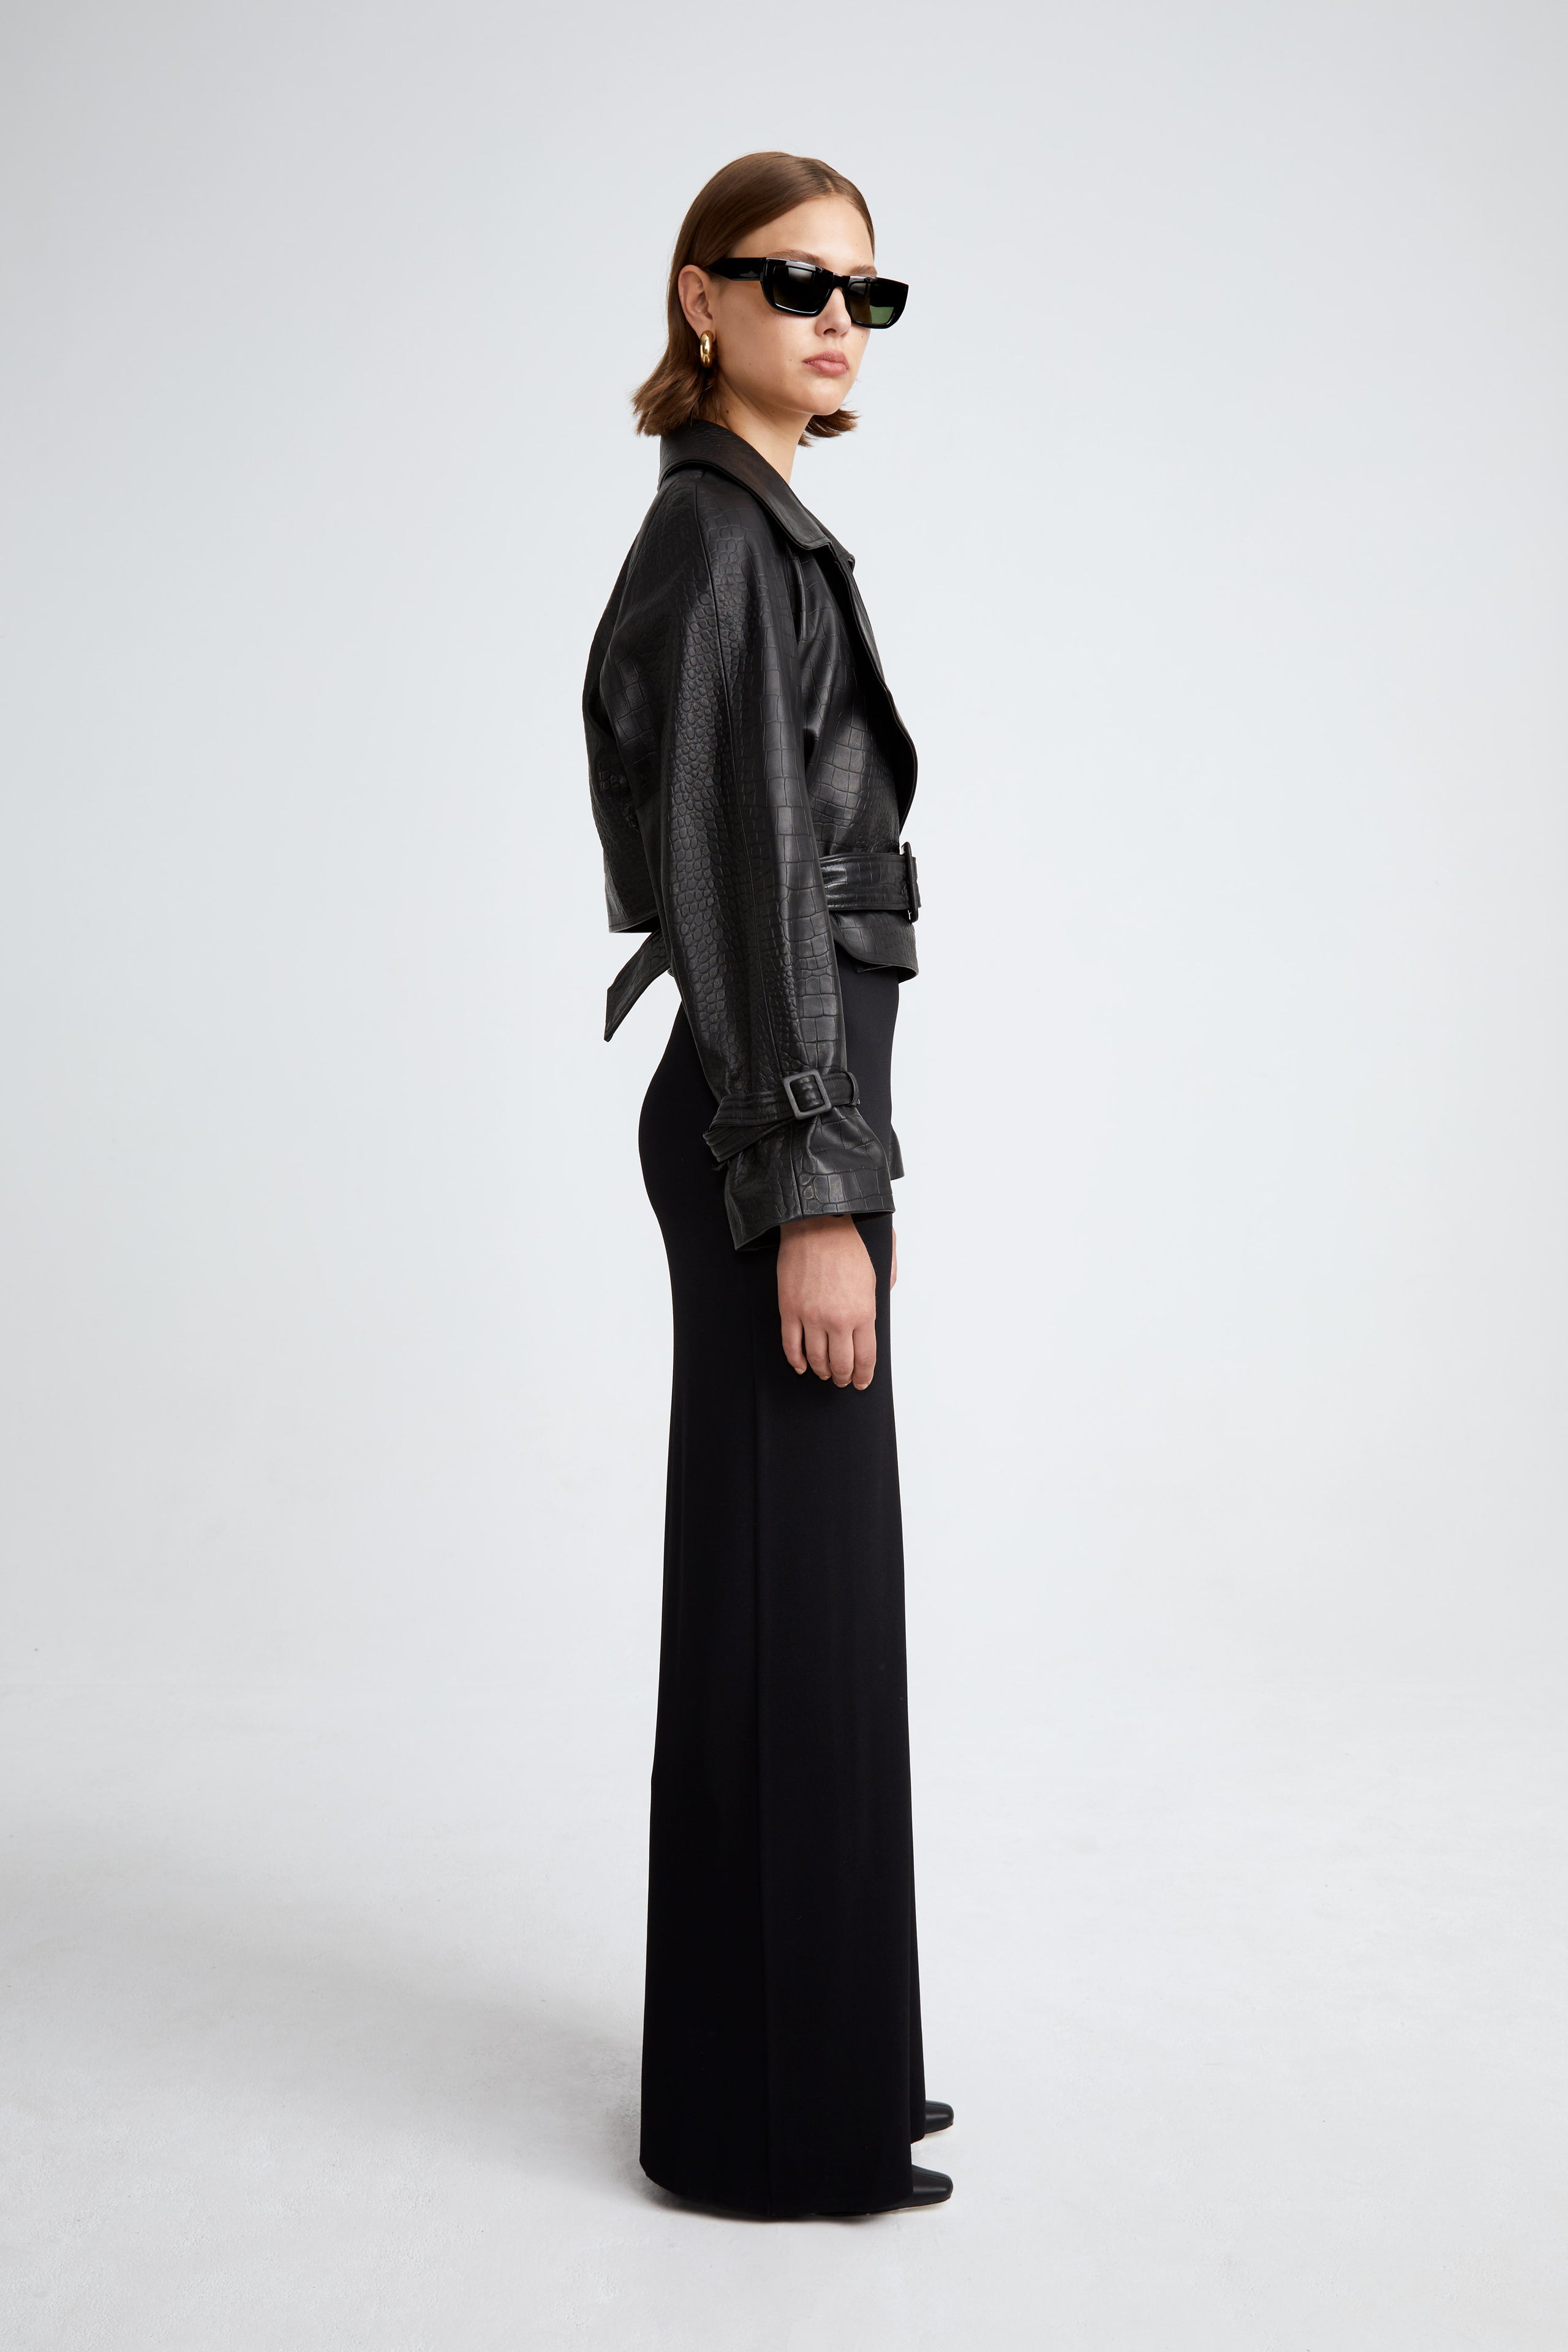 Model is wearing the Hatti Croco Black Cropped Leather Jacket Side